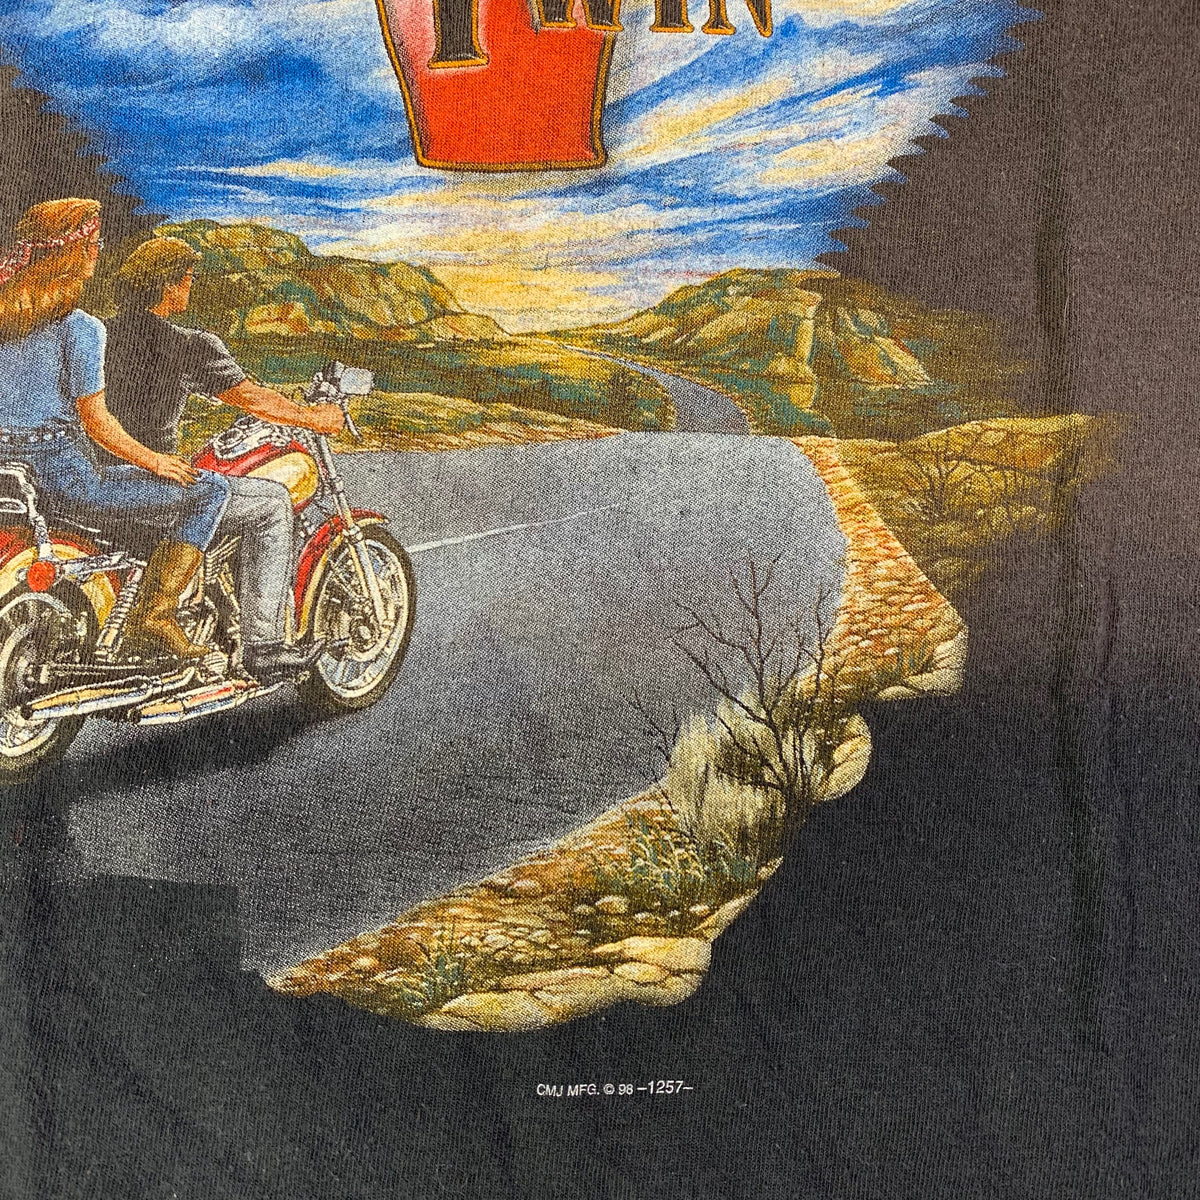 Vintage Pete&#39;s Leather &quot;Follow The Wind&quot; T-Shirt - jointcustodydc